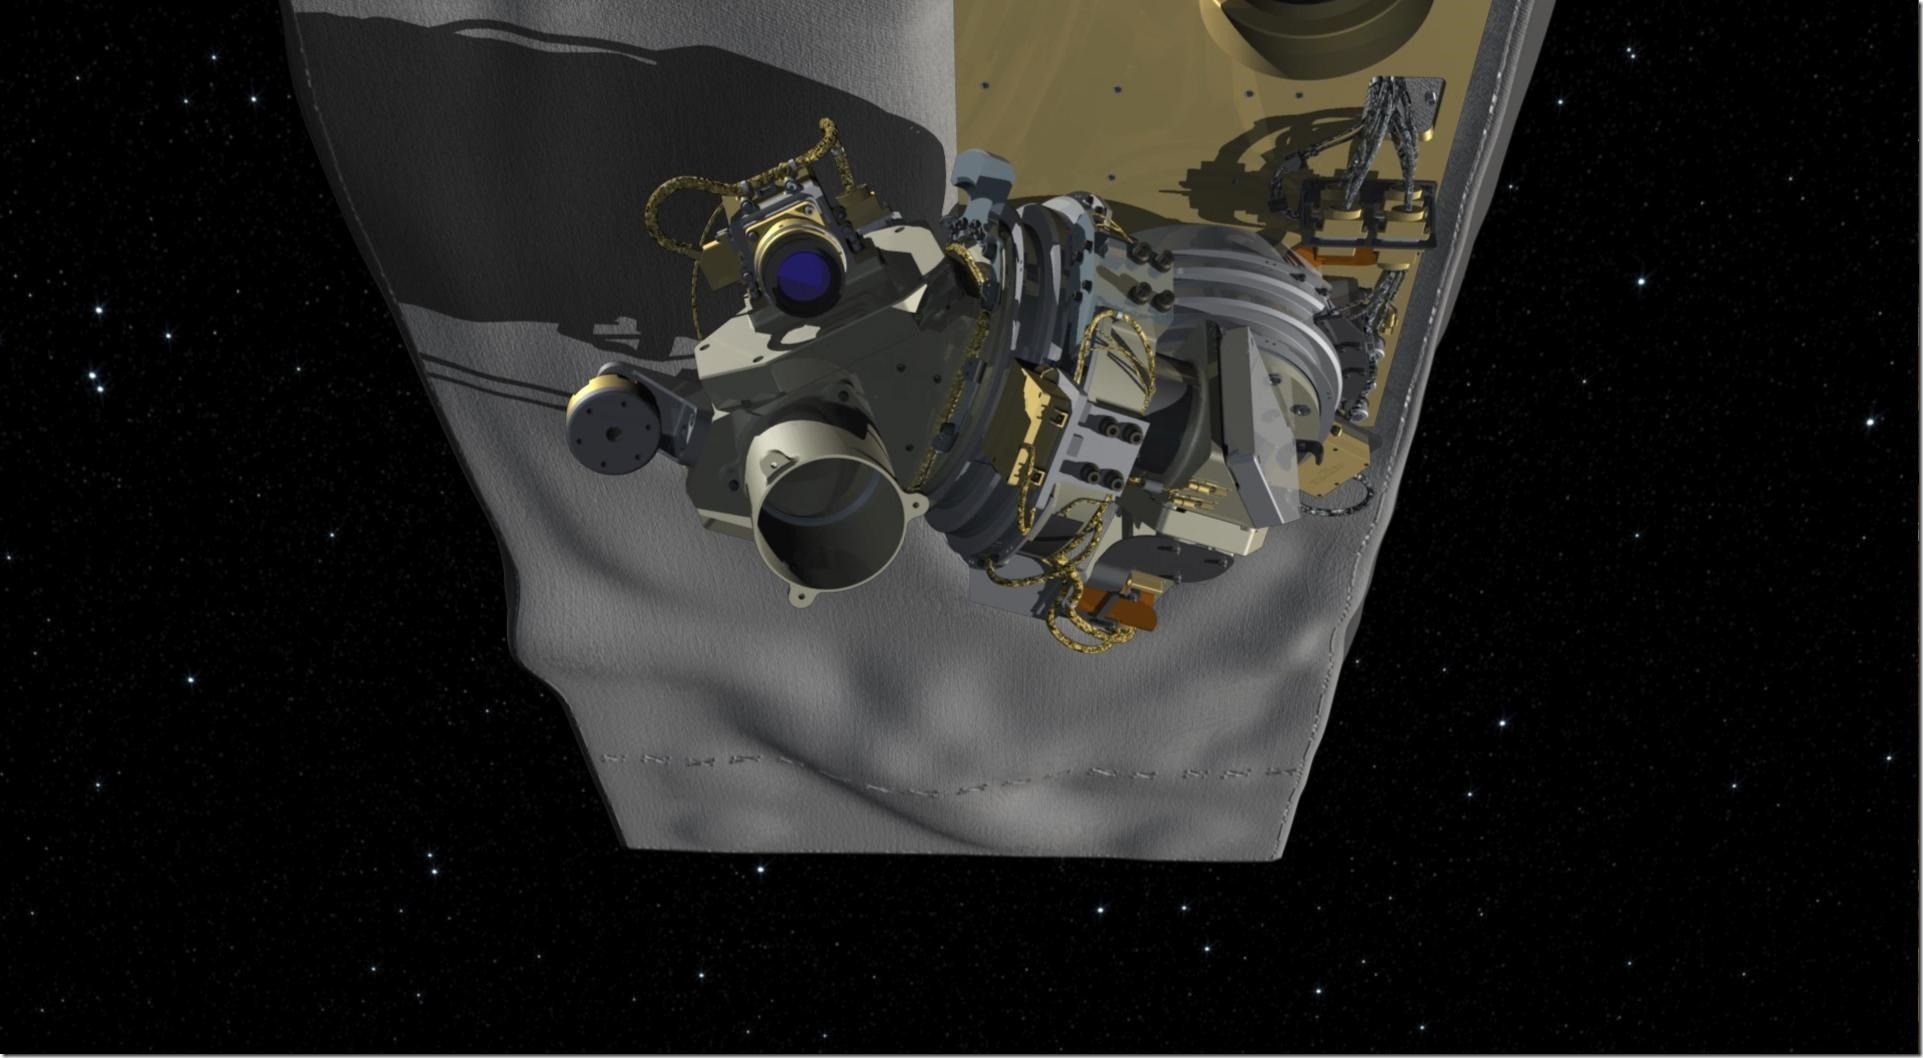 Illustration of NASA's OCO-3 mounted on the underside of the International Space Station. OCO-3 is managed by NASA's Jet Propulsion Laboratory in Pasadena, California. For more information on OCO-3, visit: https://ocov3.jpl.nasa.gov/.